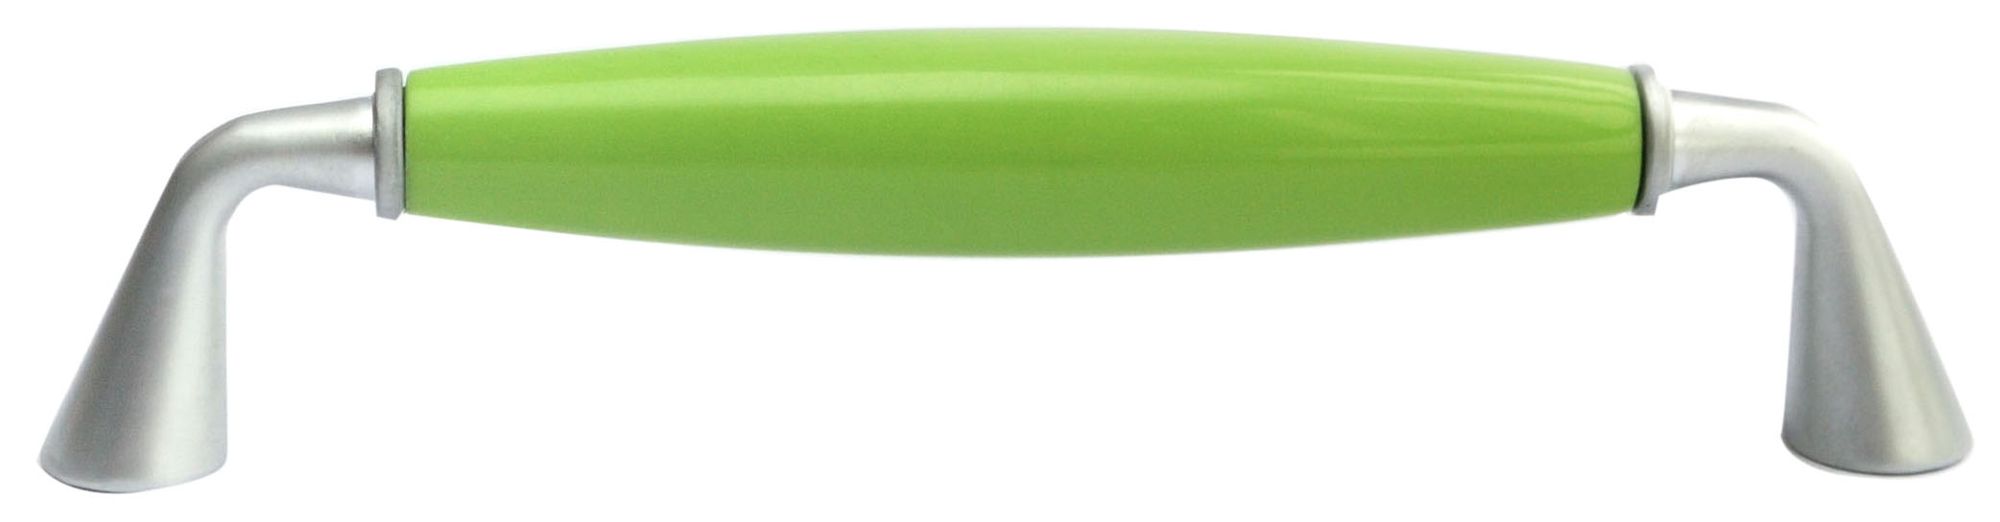 Matt Chrome effect Green Cabinet Pull handle